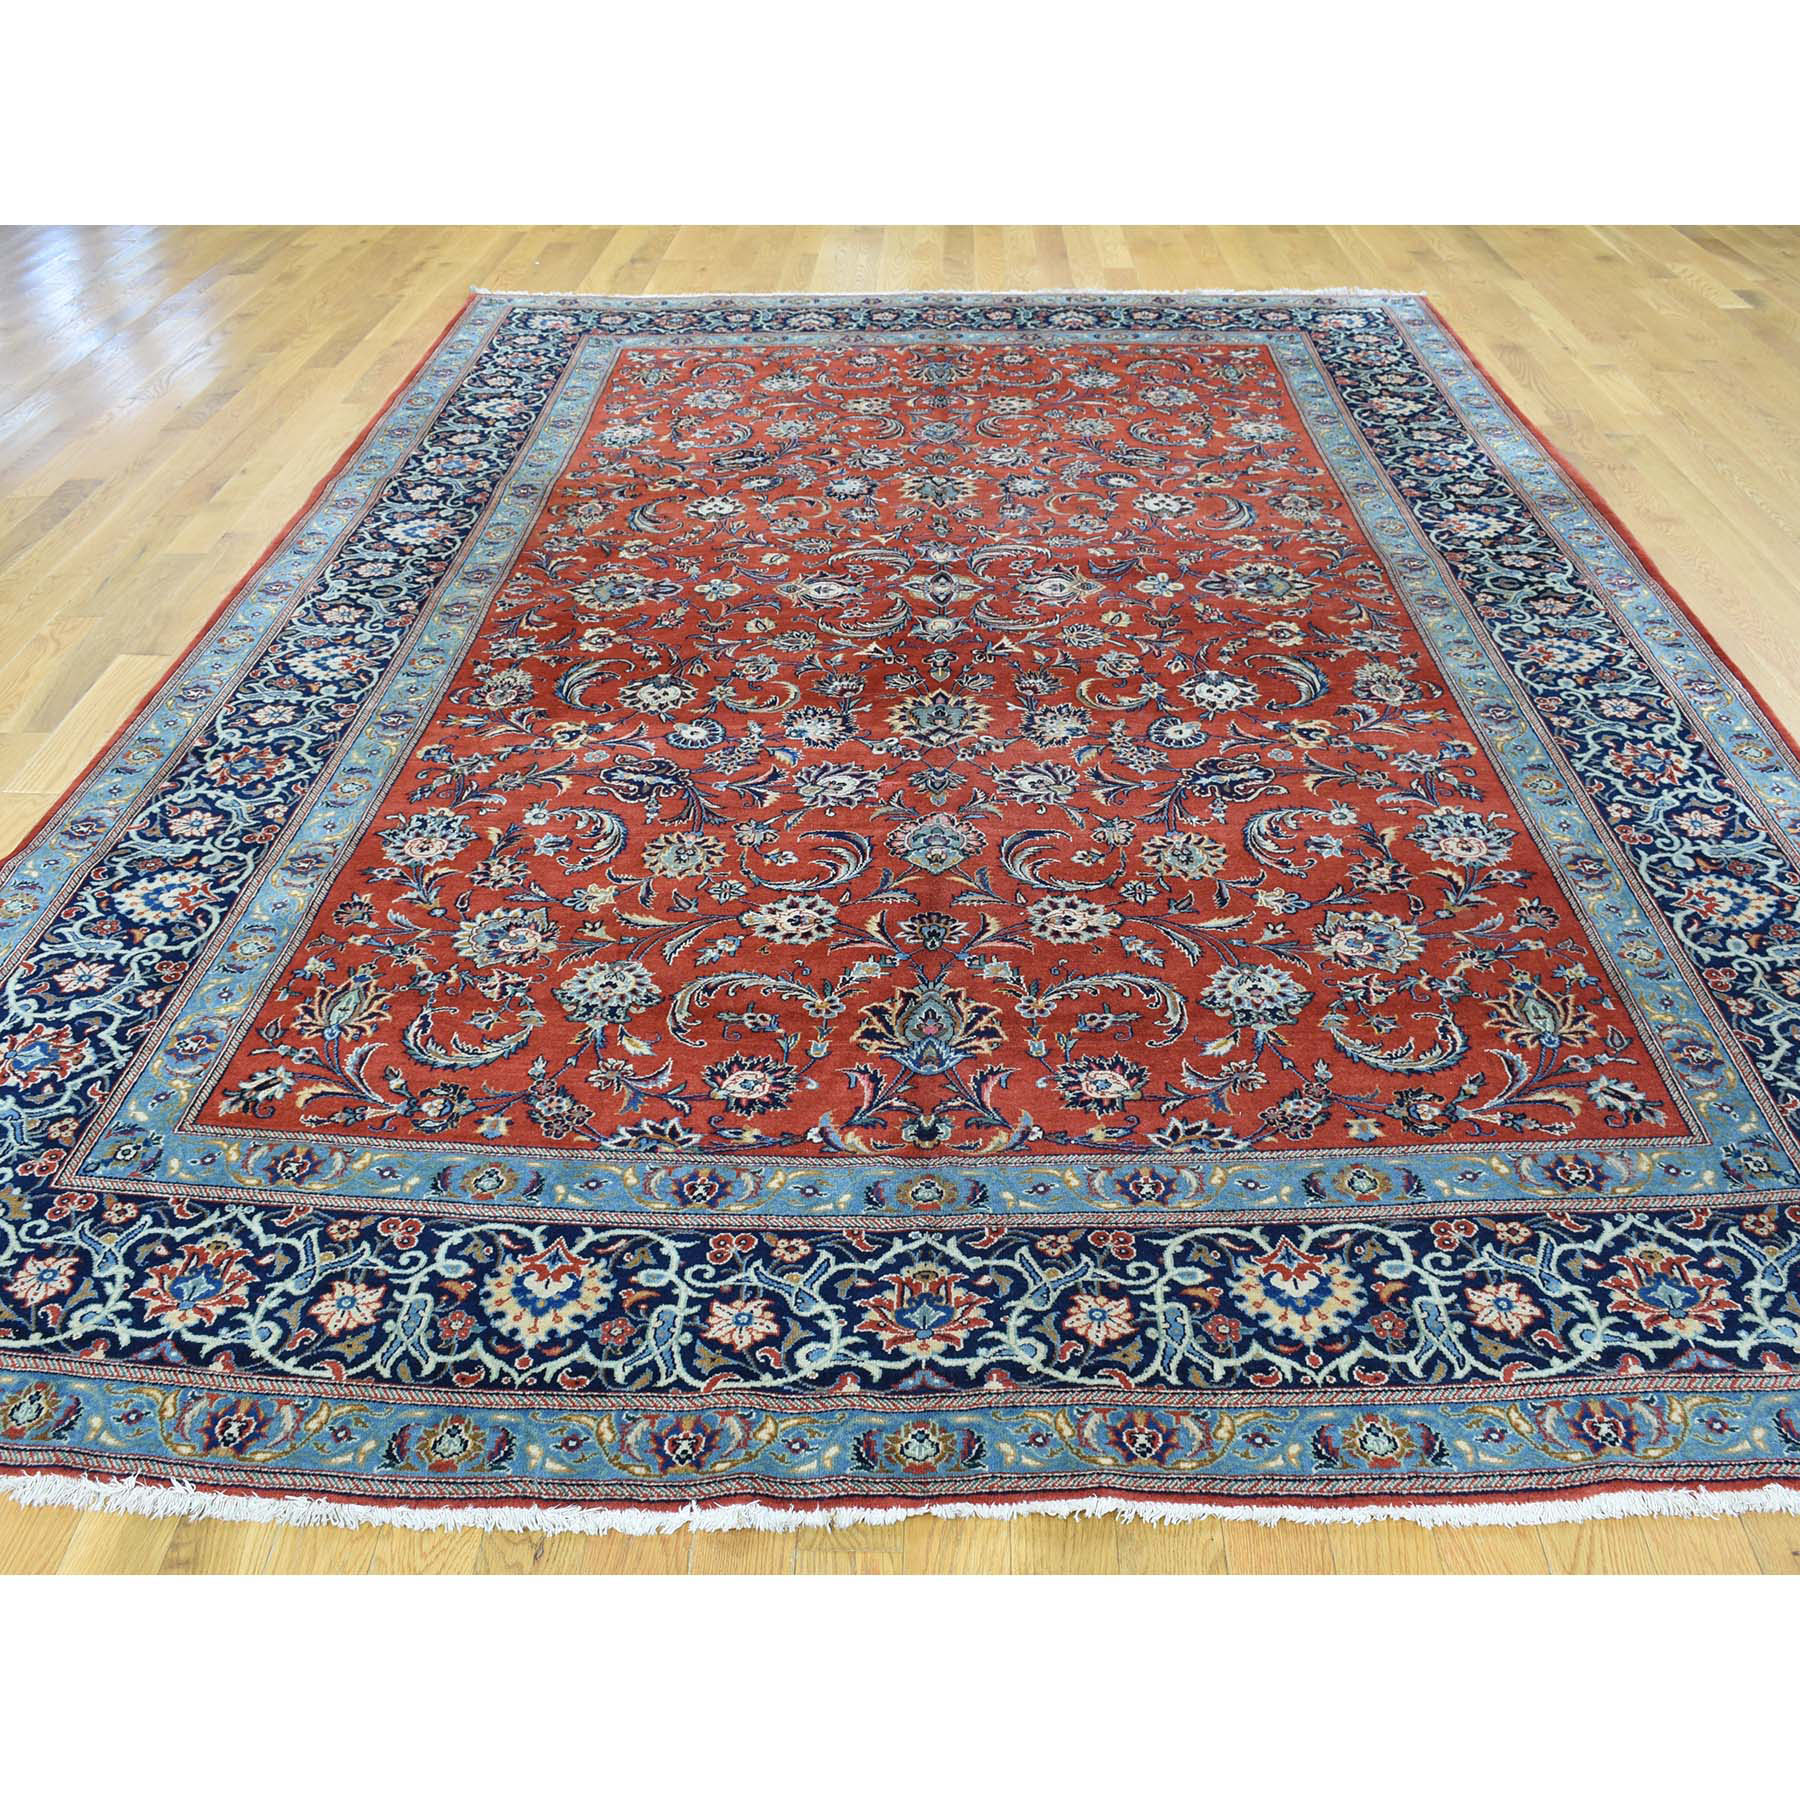 7'10"x11' Hand Woven Antique Persian Kashan Full Pile Oriental Rug 